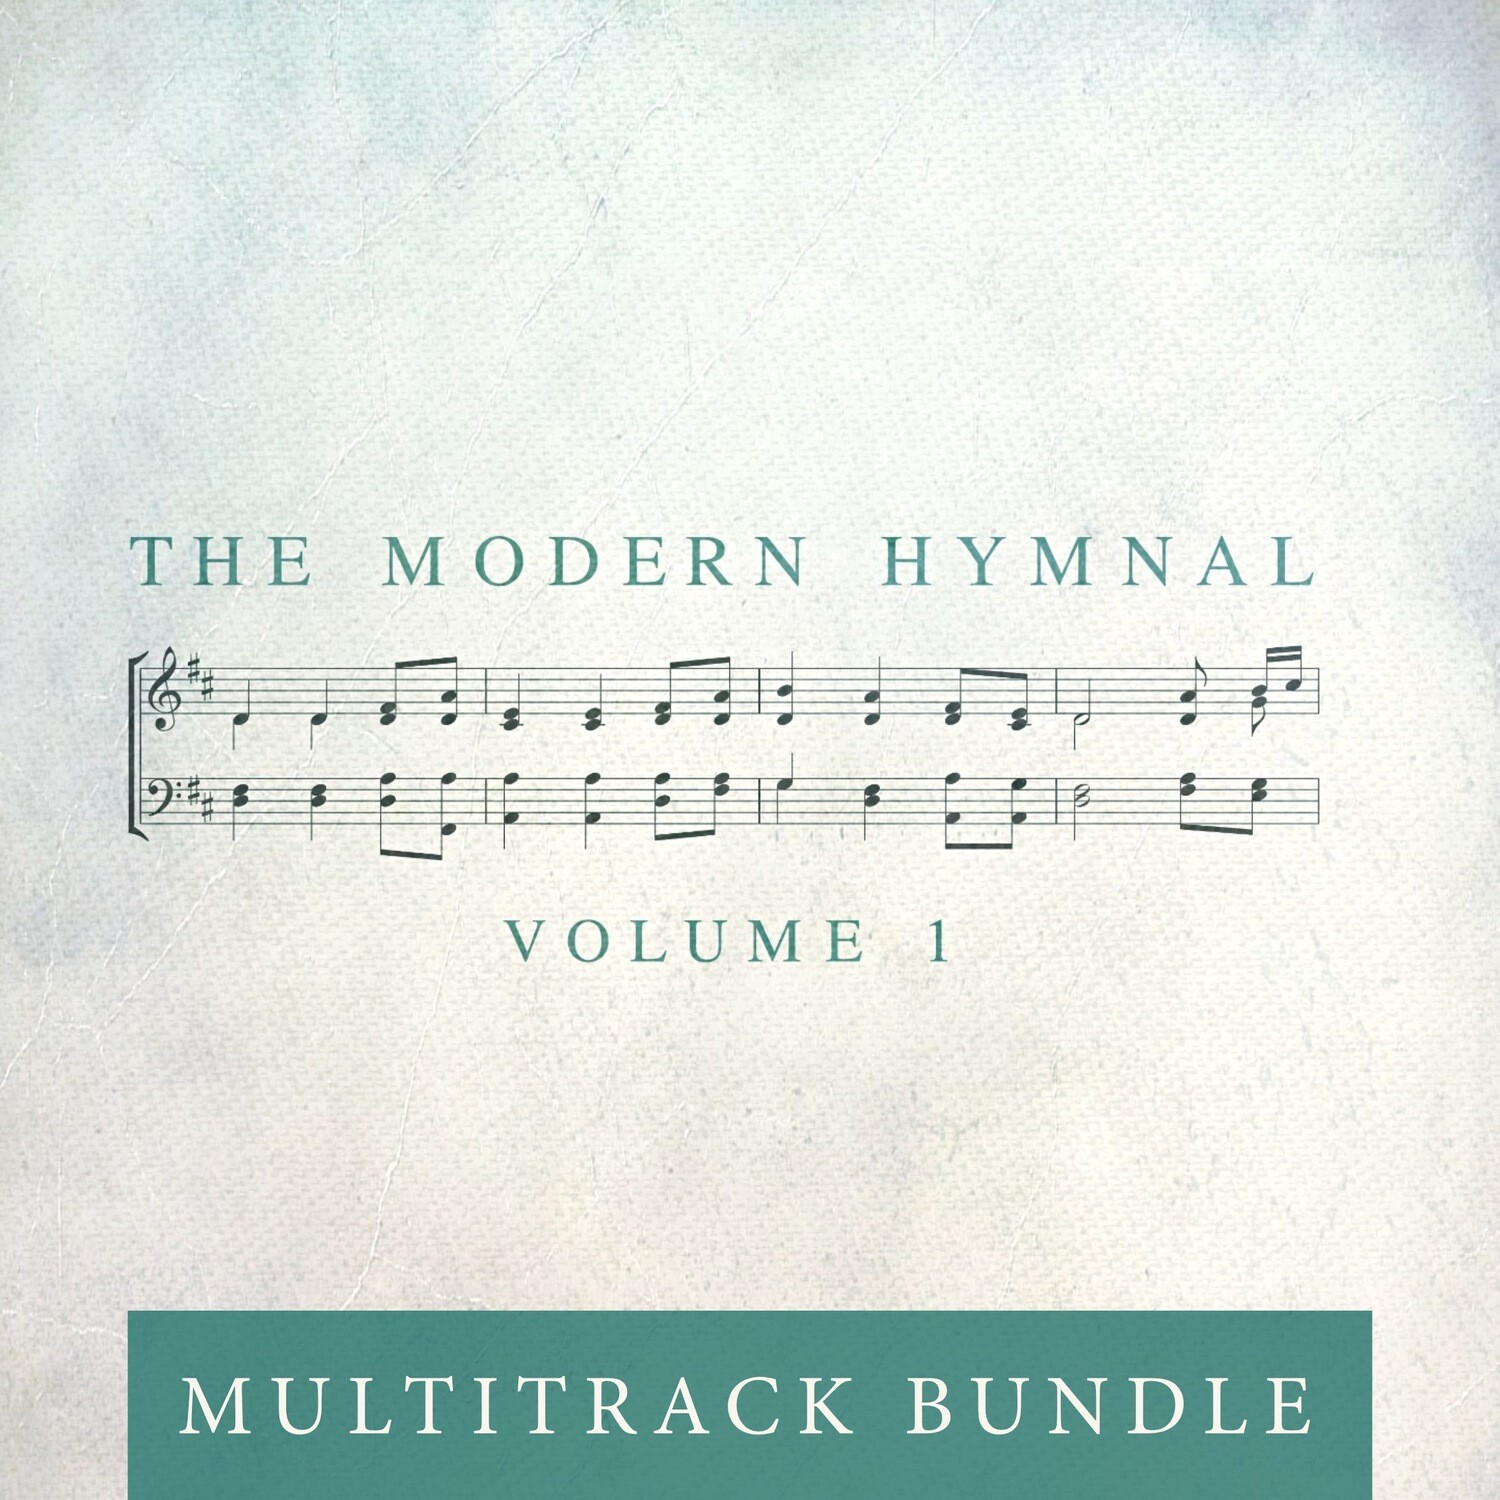 The Modern Hymnal Multitrack Bundle